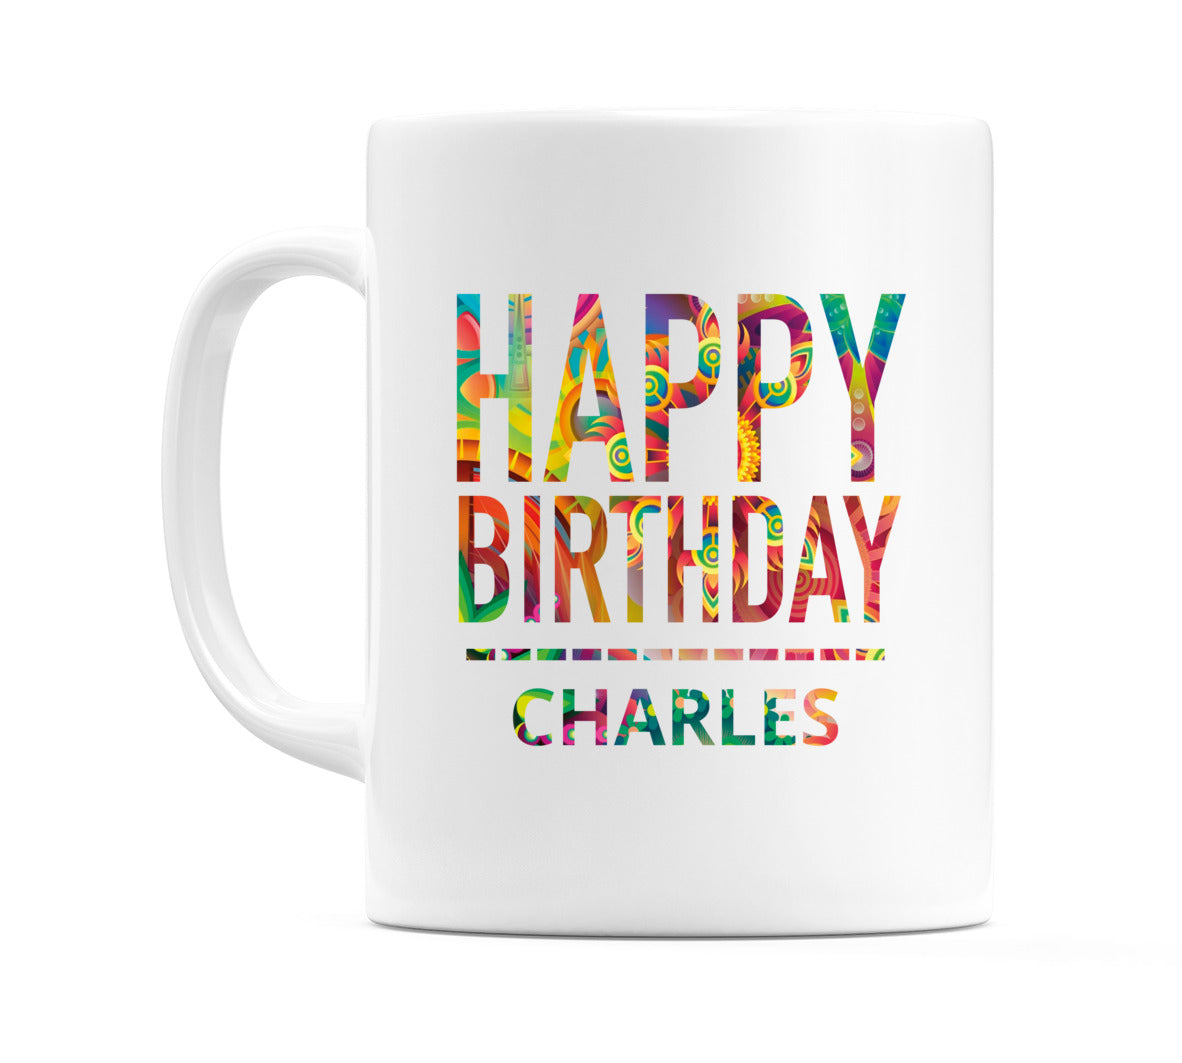 Happy Birthday Charles (Tie Dye Effect) Mug Cup by WeDoMugs